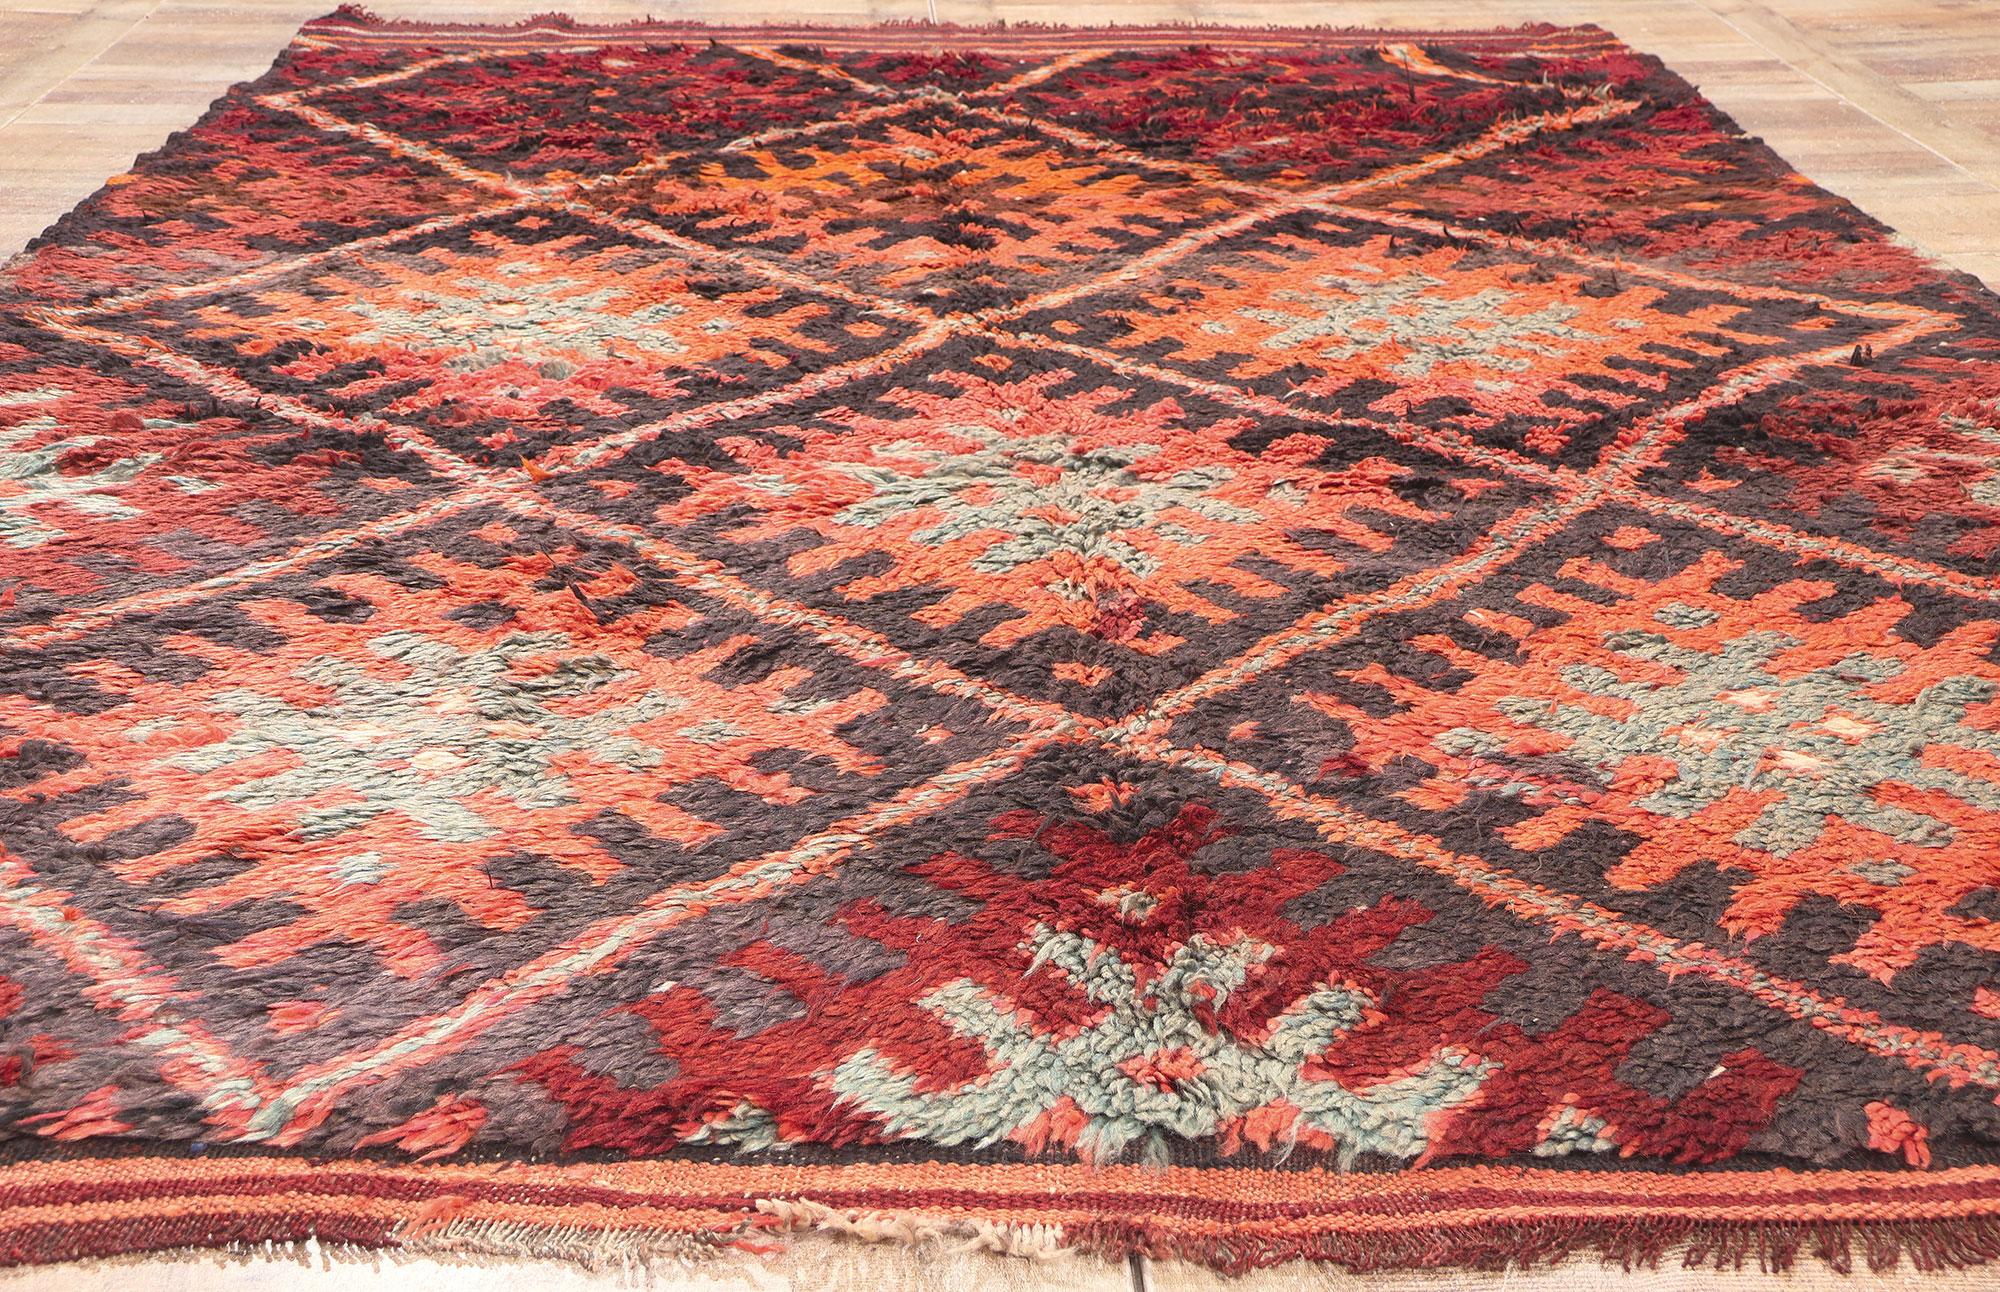 Vintage Beni MGuild Moroccan Rug, Midcentury Modern Meets Tribal Enchantment For Sale 1